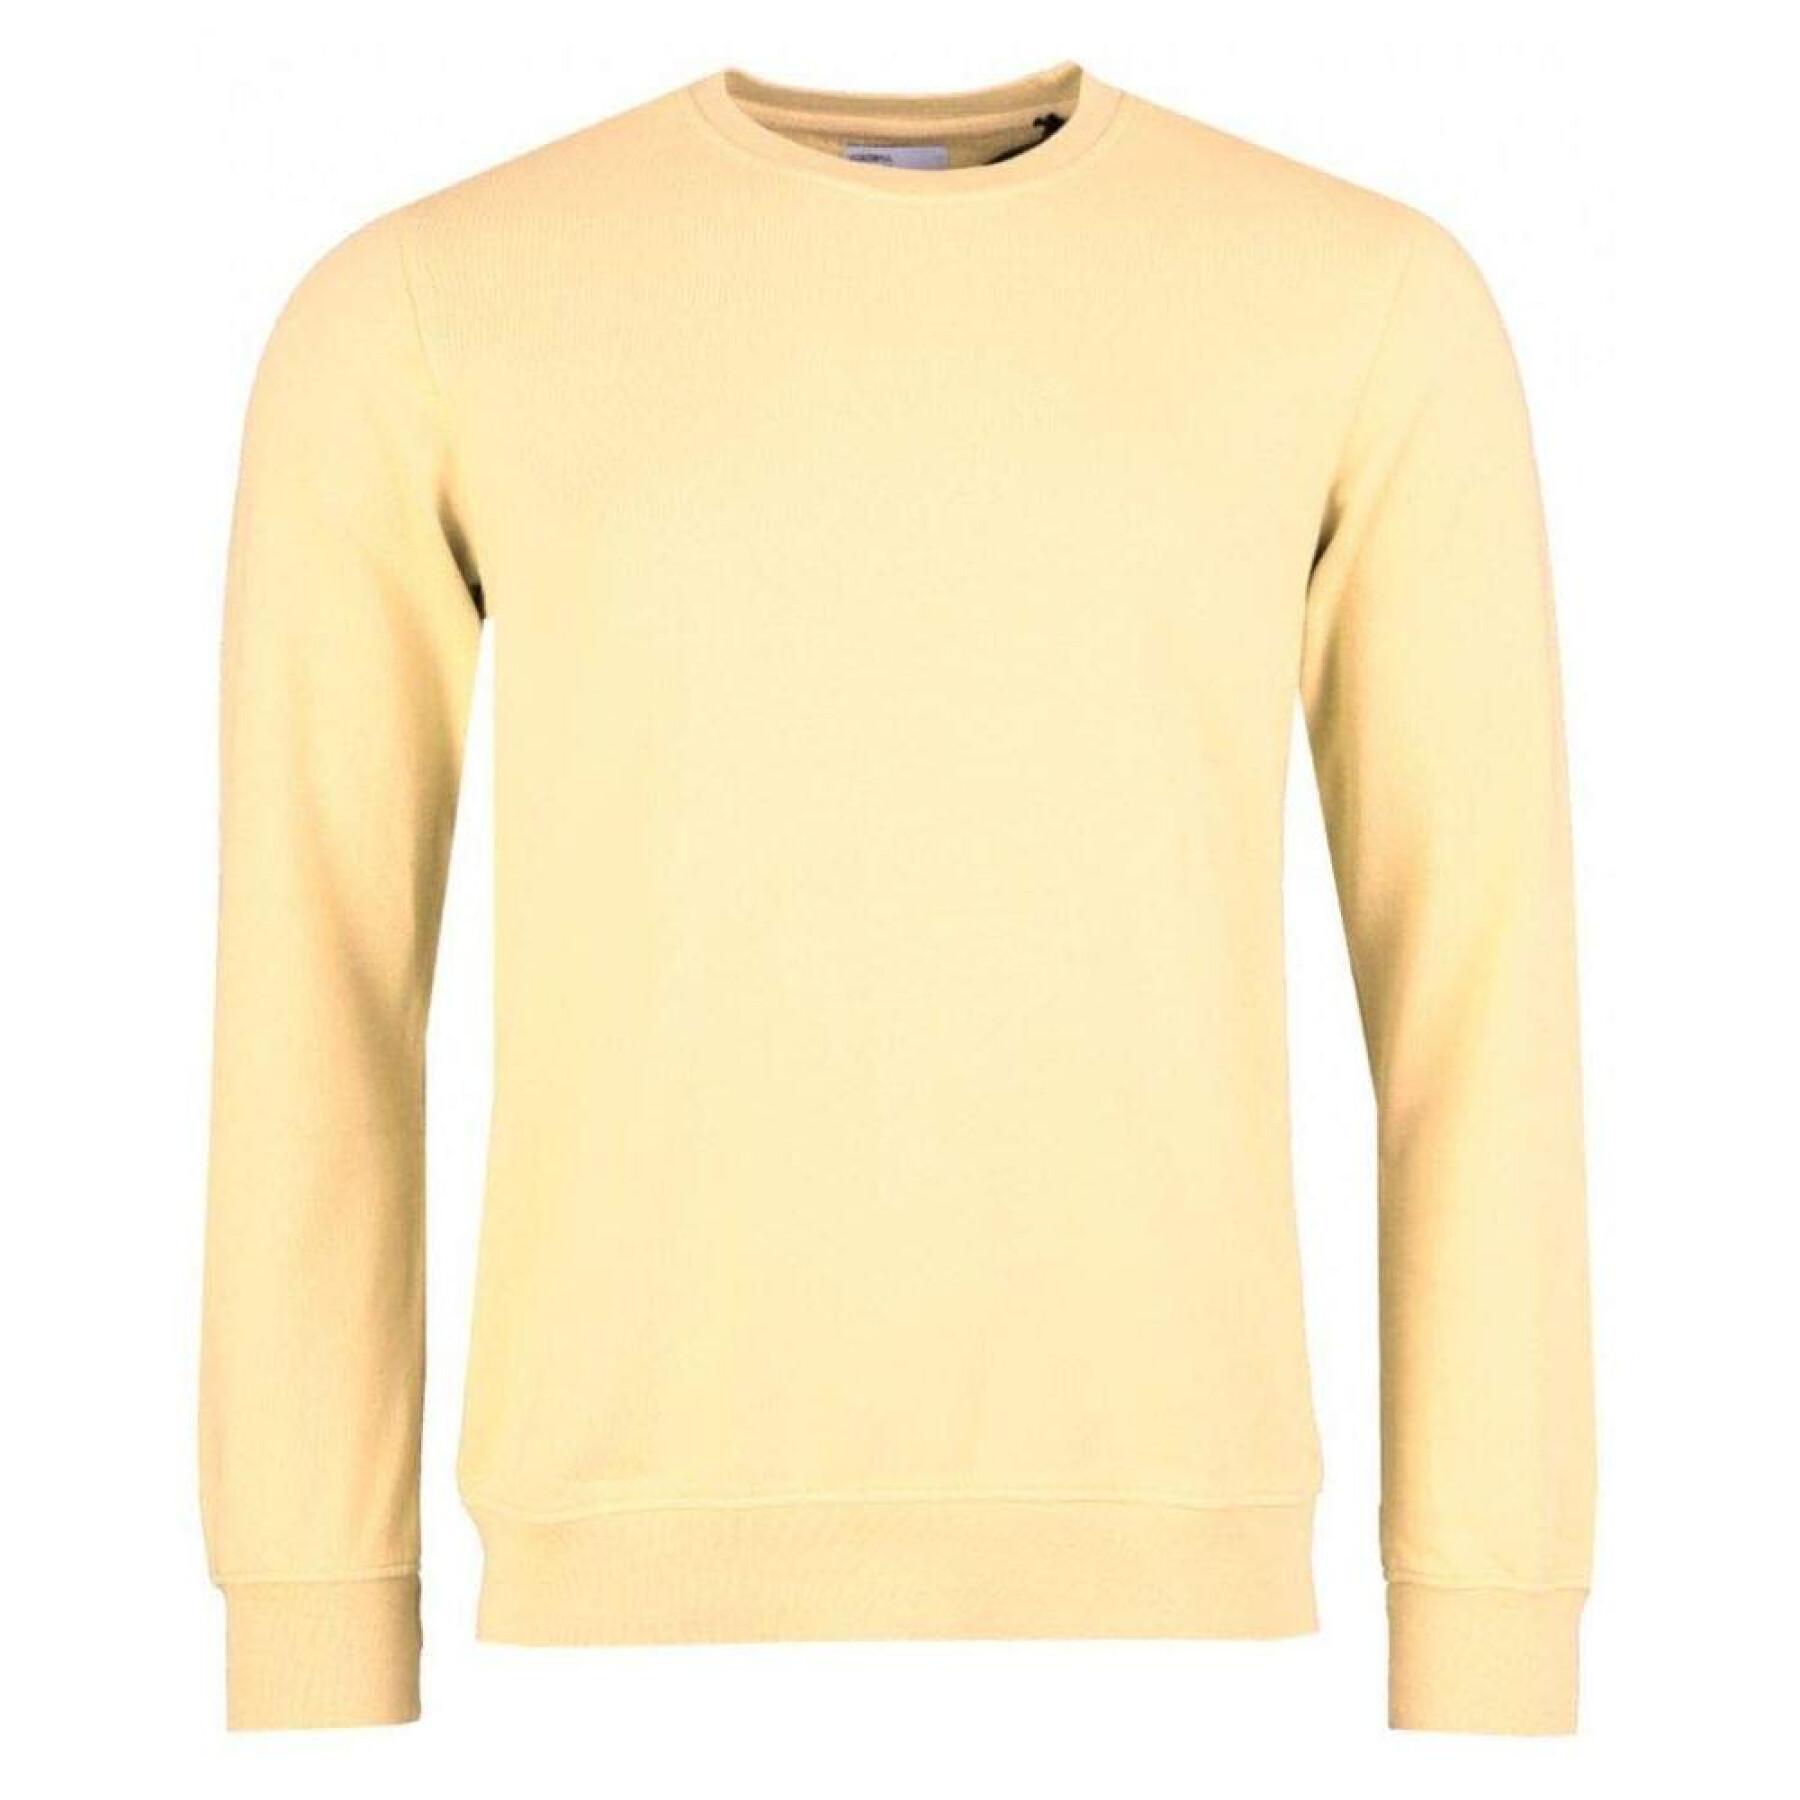 Sweatshirt mit Rundhalsausschnitt Colorful Standard Classic Organic soft yellow